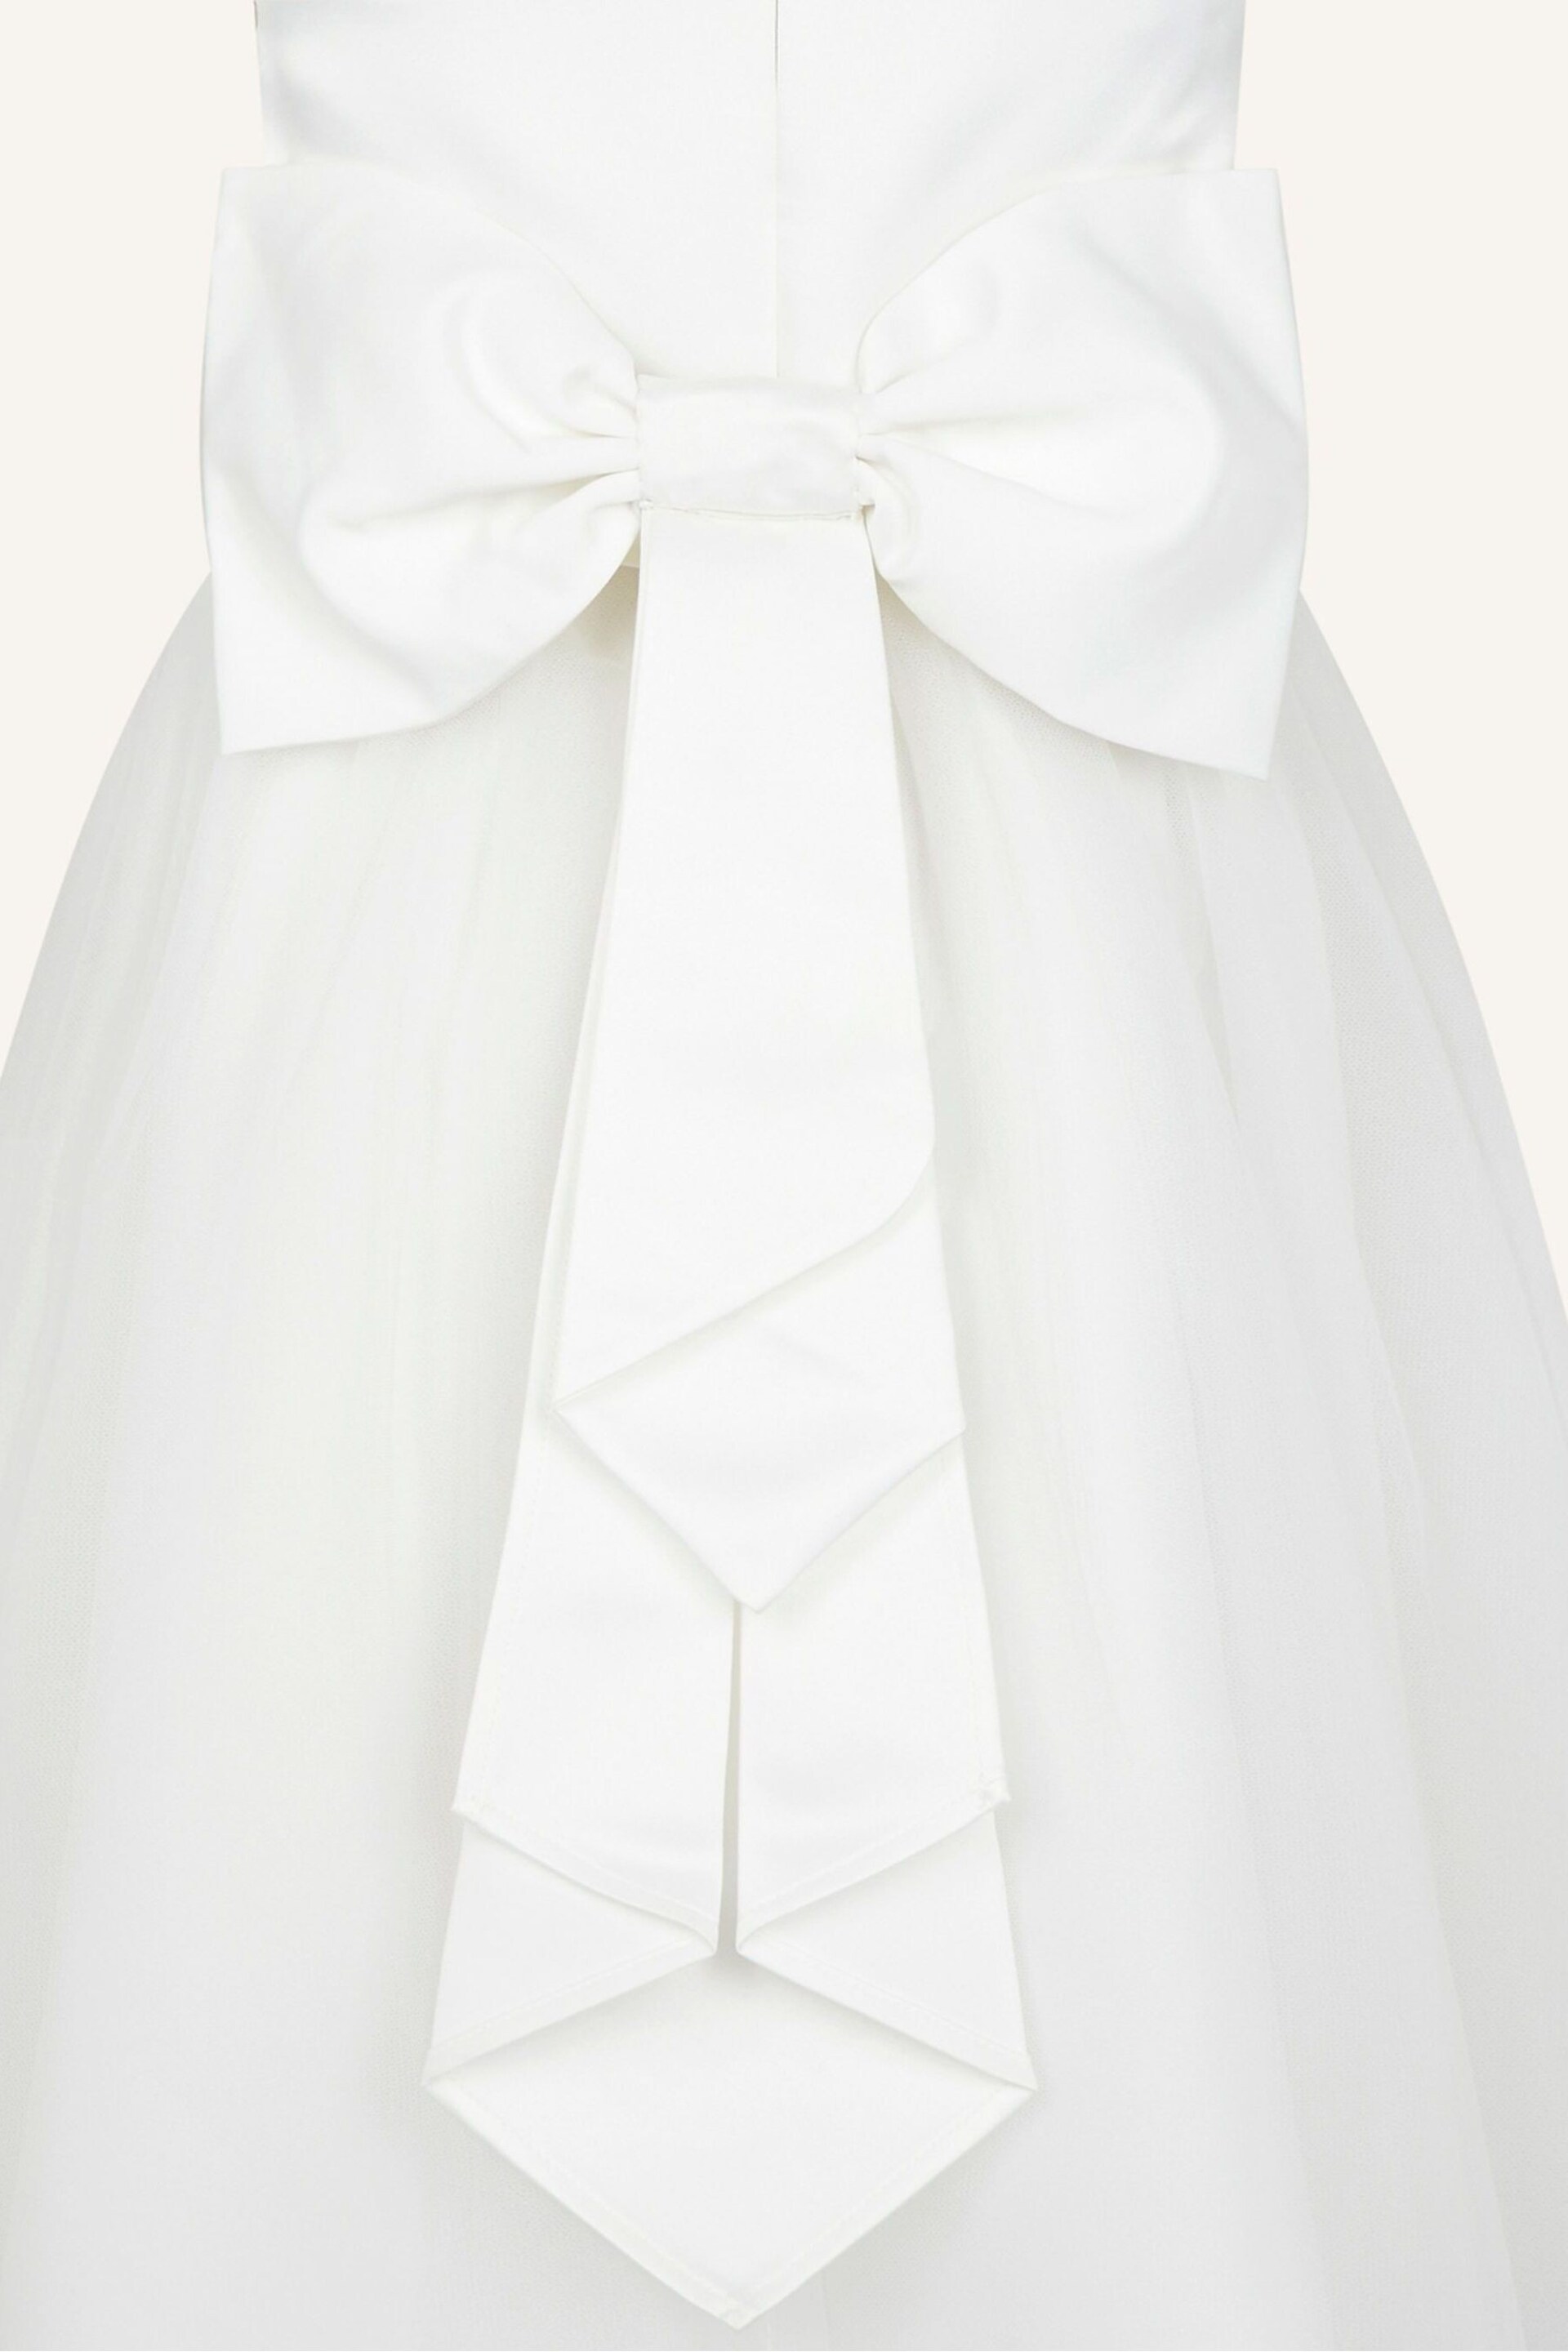 Monsoon Tulle Bridesmaid Dress - Image 2 of 2